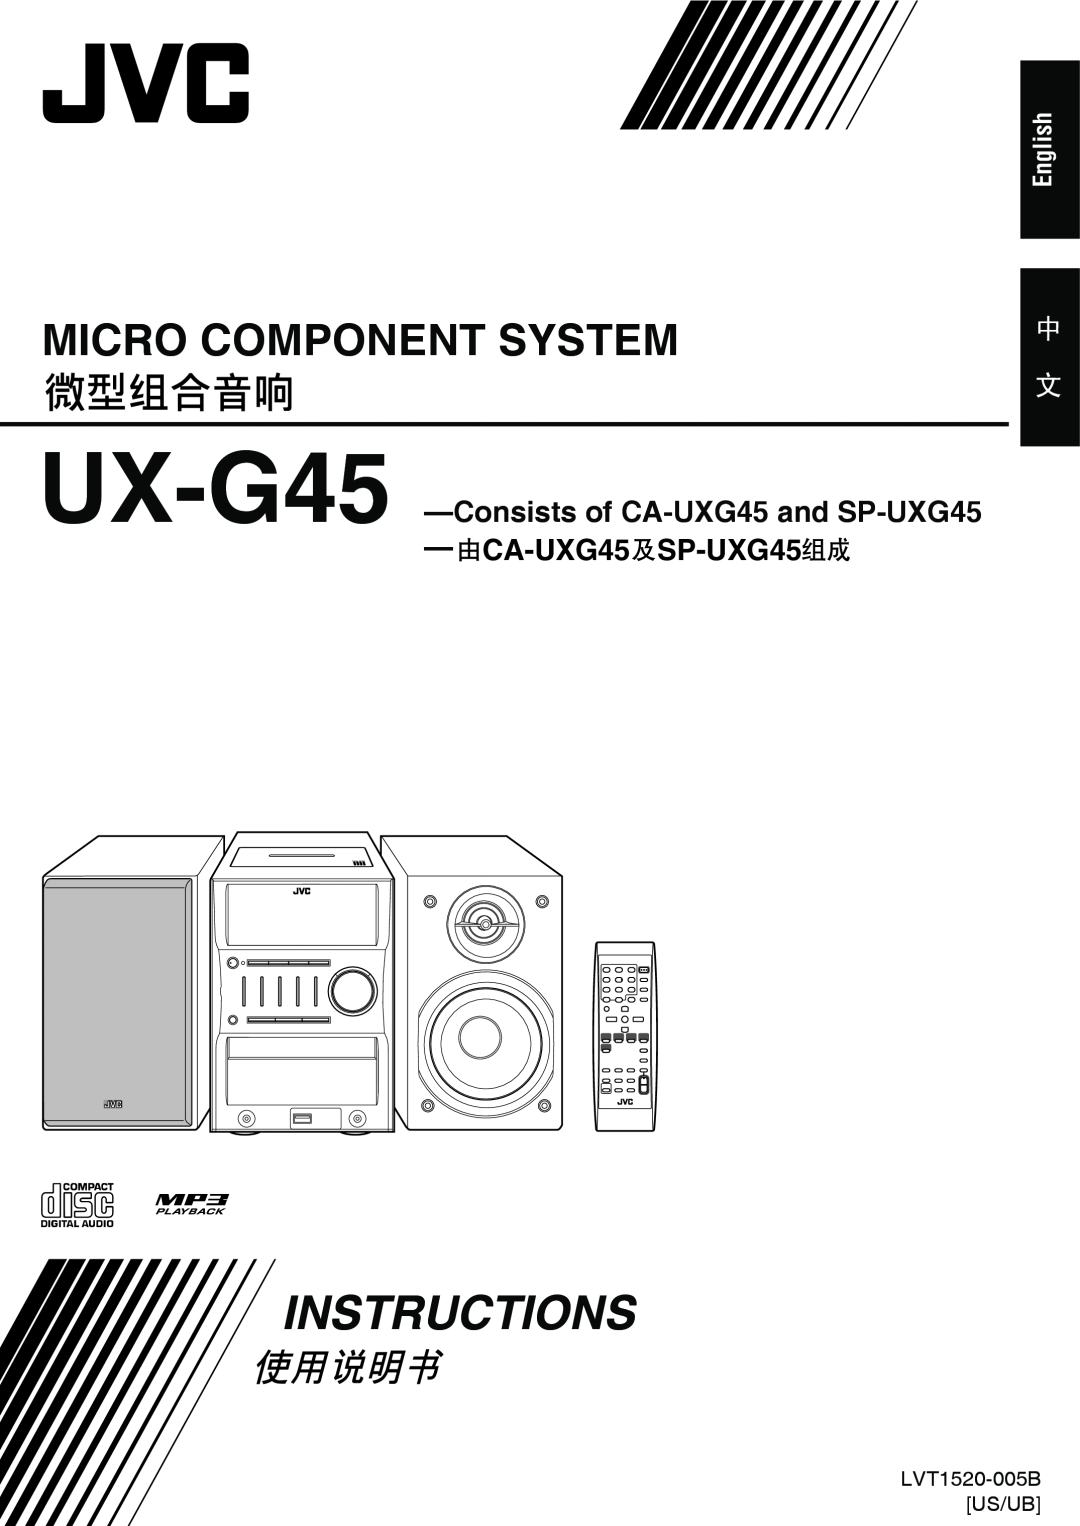 JVC manual Instructions, Micro Component System, UX-G45 -Consistsof CA-UXG45and SP-UXG45, CA-UXG45SP-UXG45, English 